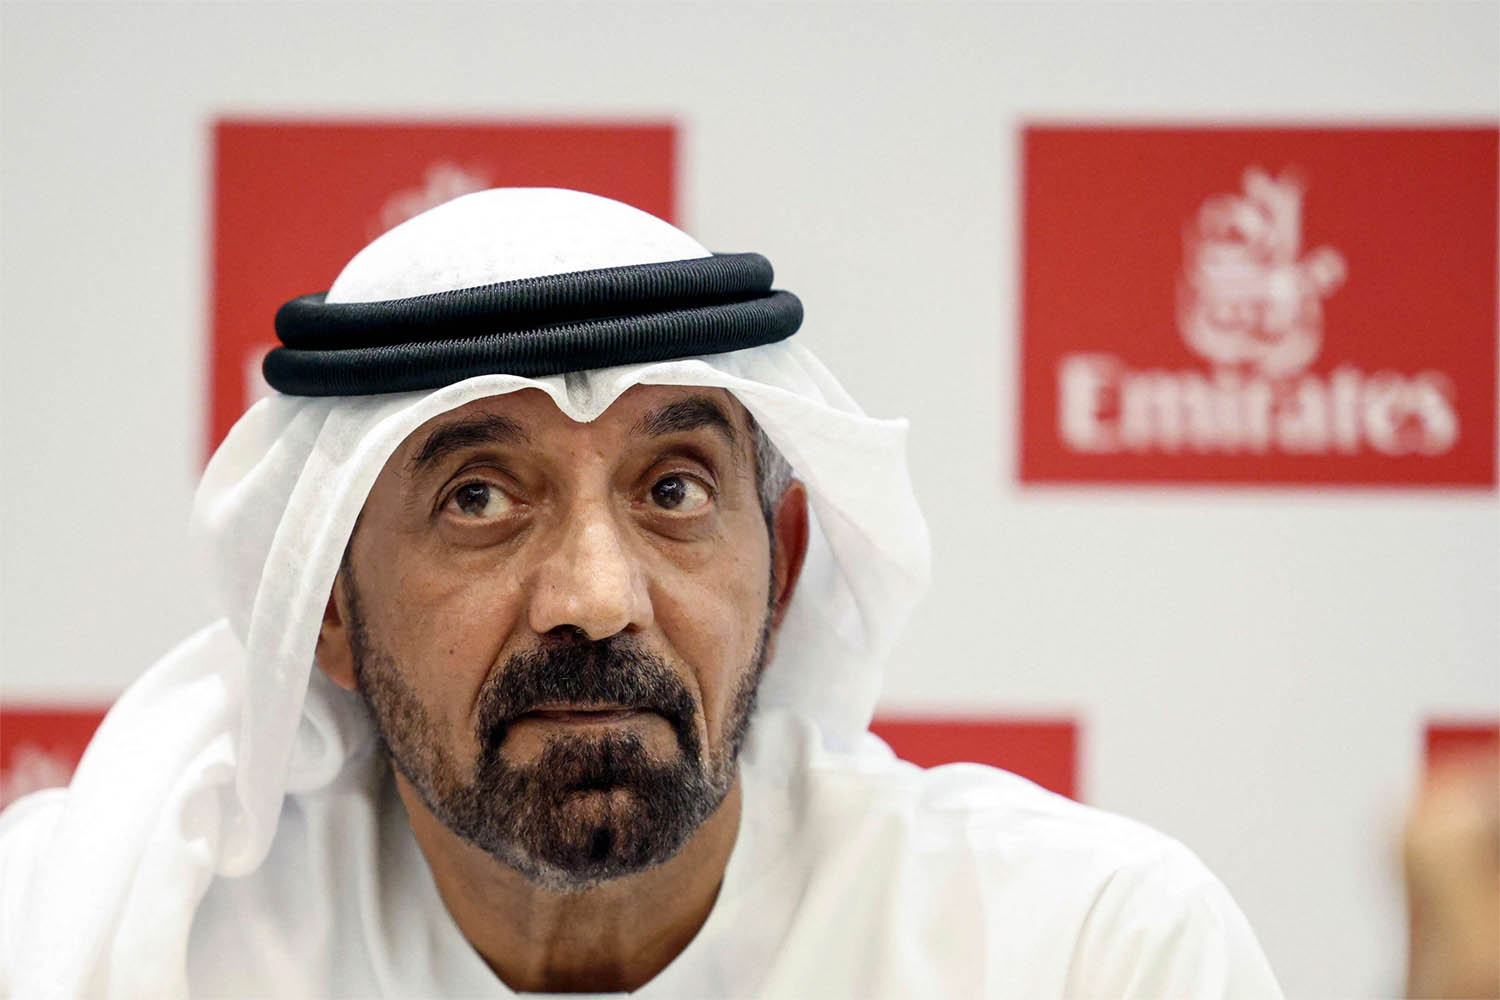 Emirates' CEO and Chairman Sheikh Ahmed bin Saeed Al Maktoum